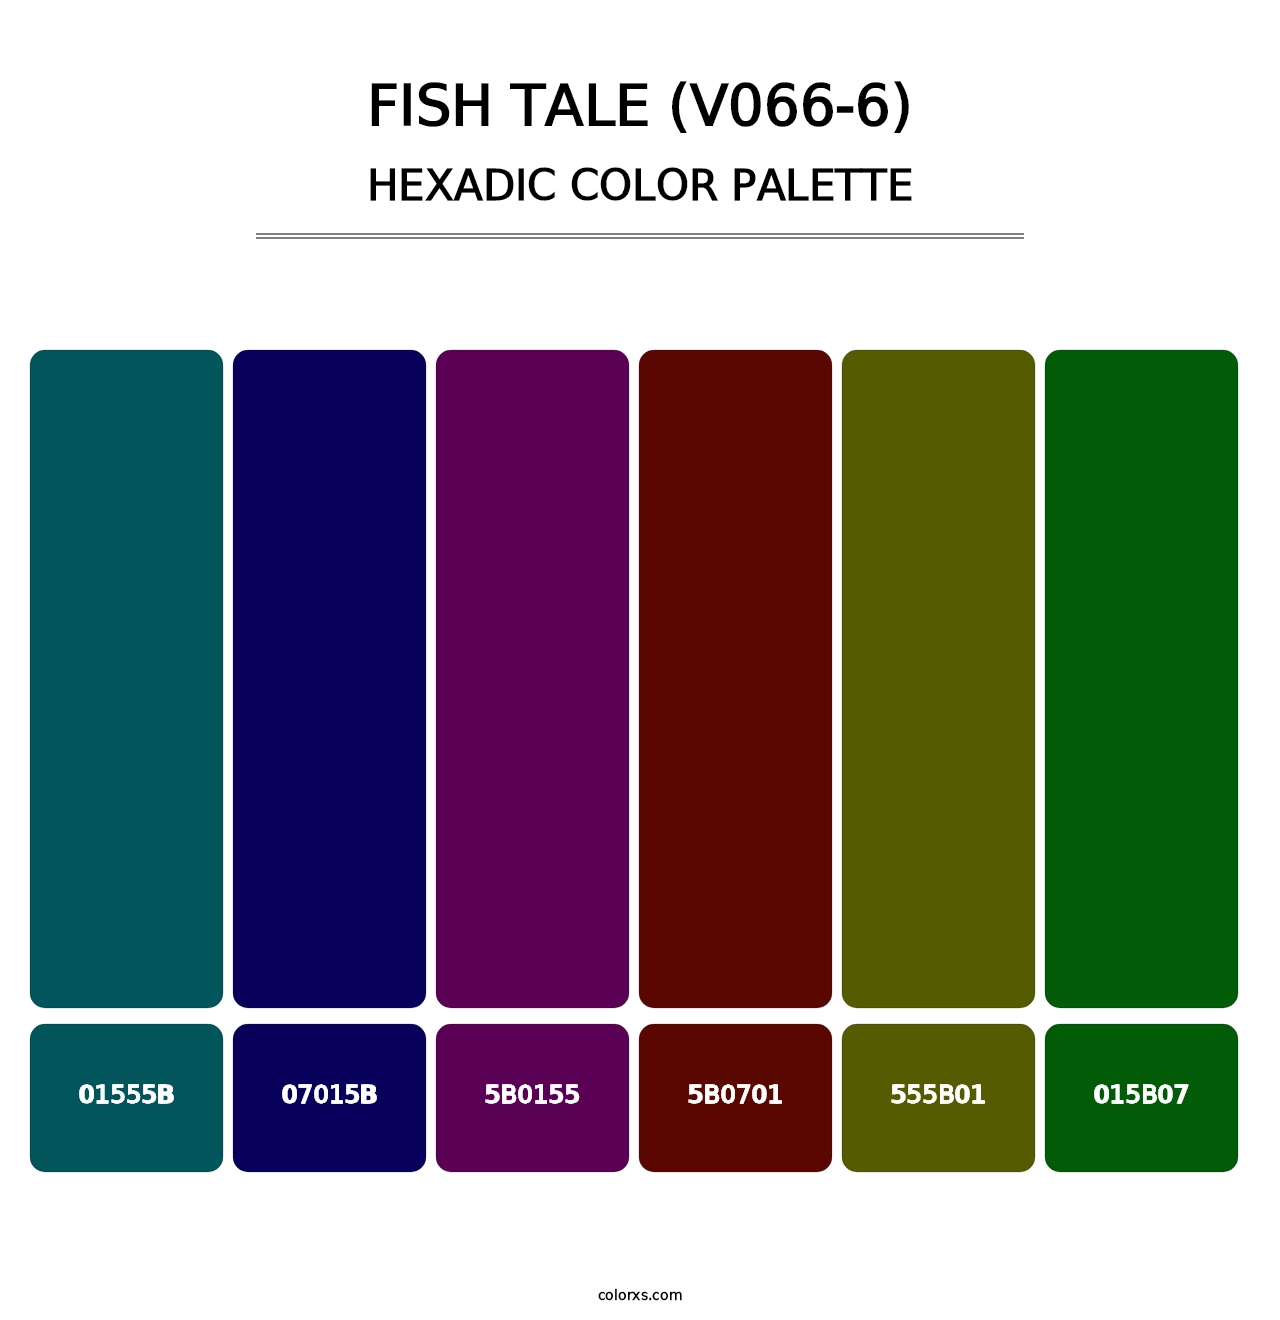 Fish Tale (V066-6) - Hexadic Color Palette